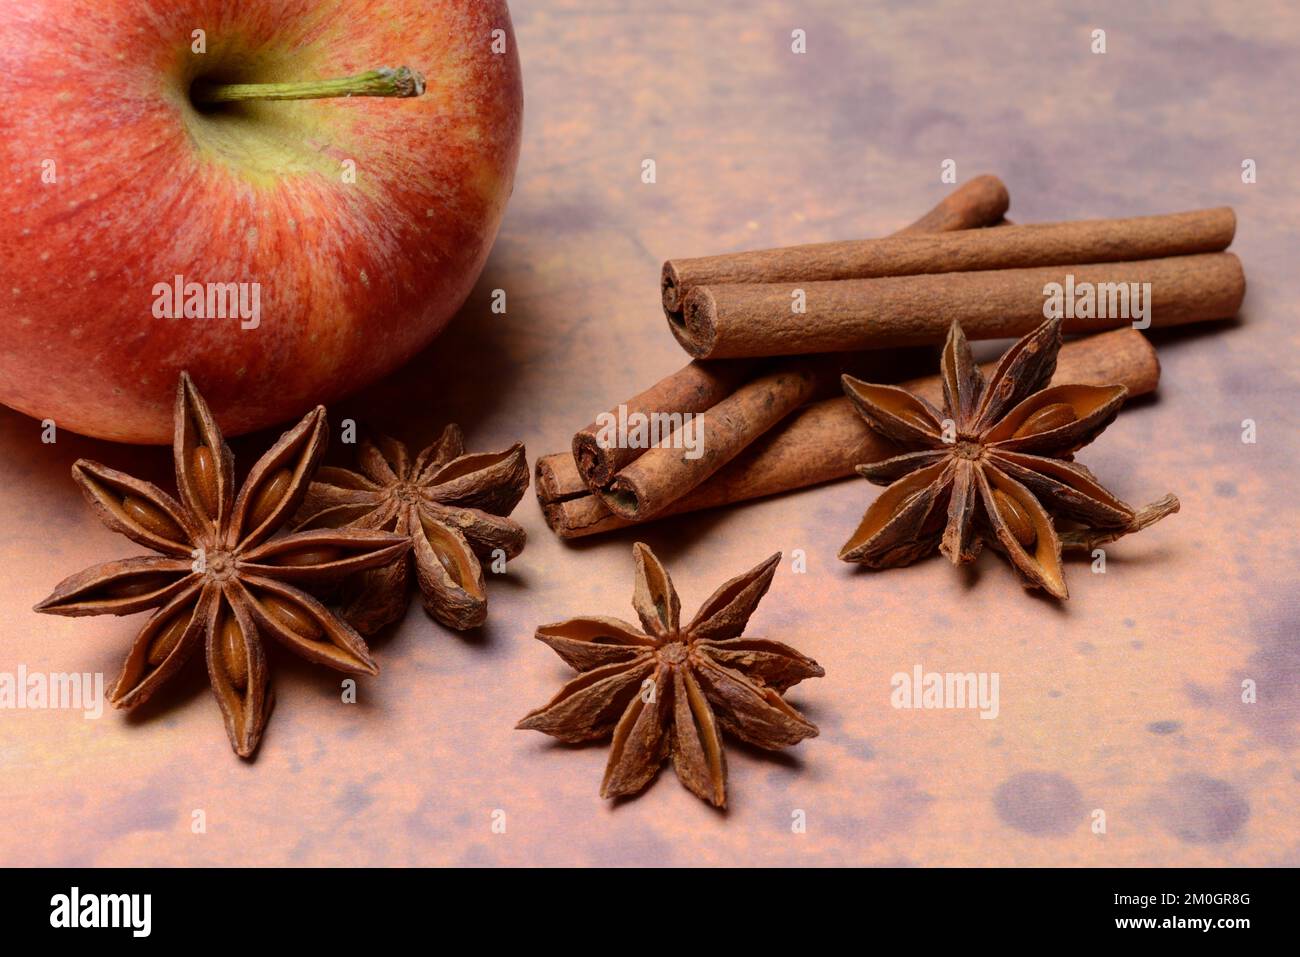 Star anise (Illicium verum) and cinnamon sticks with star anise, Cinnamomum Stock Photo